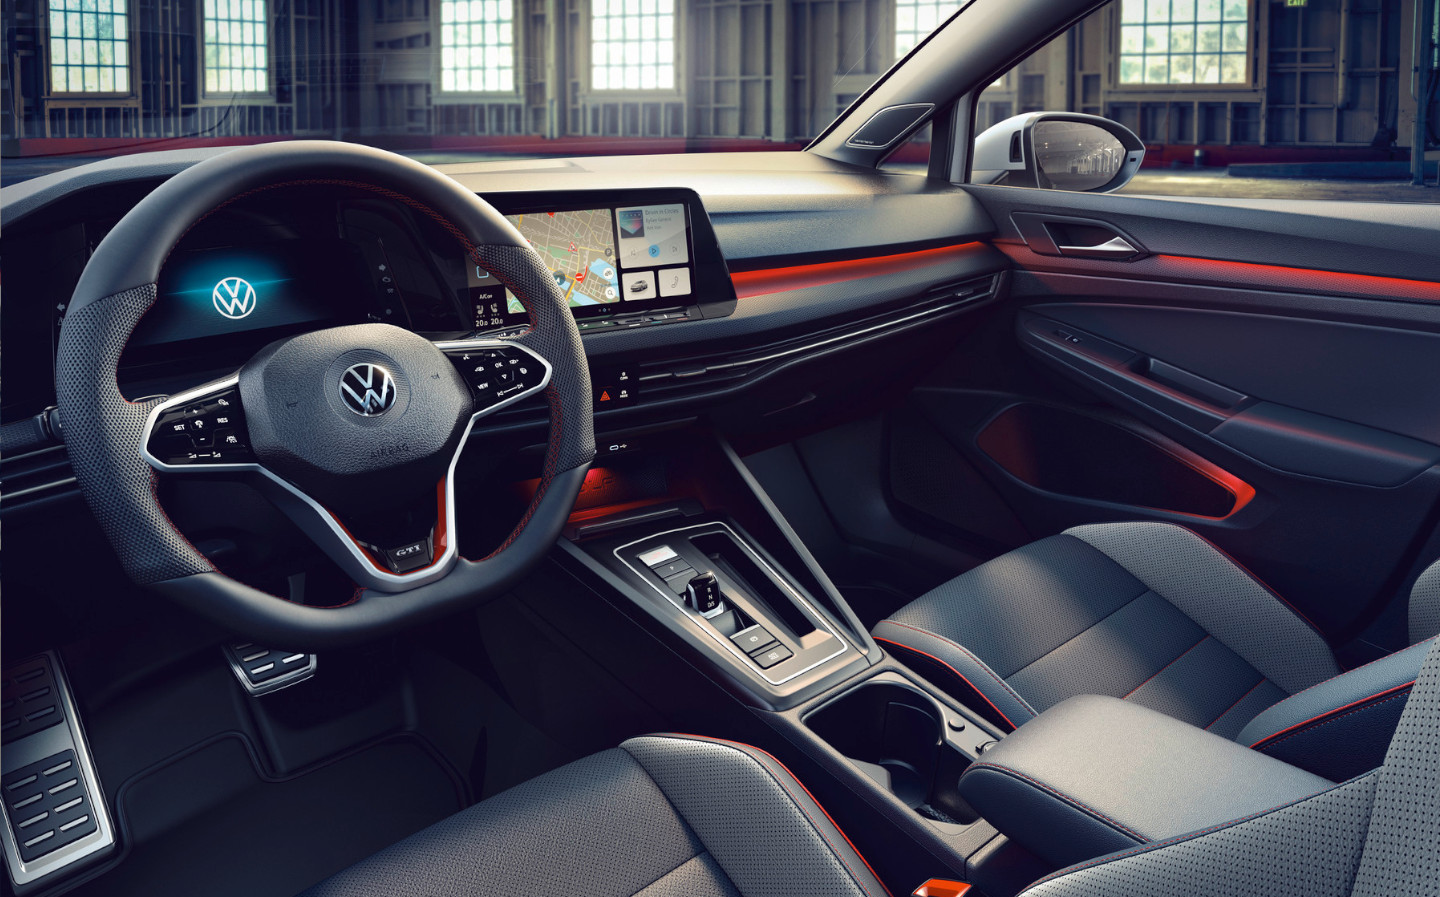 VW unveils flagship Golf GTI Clubsport